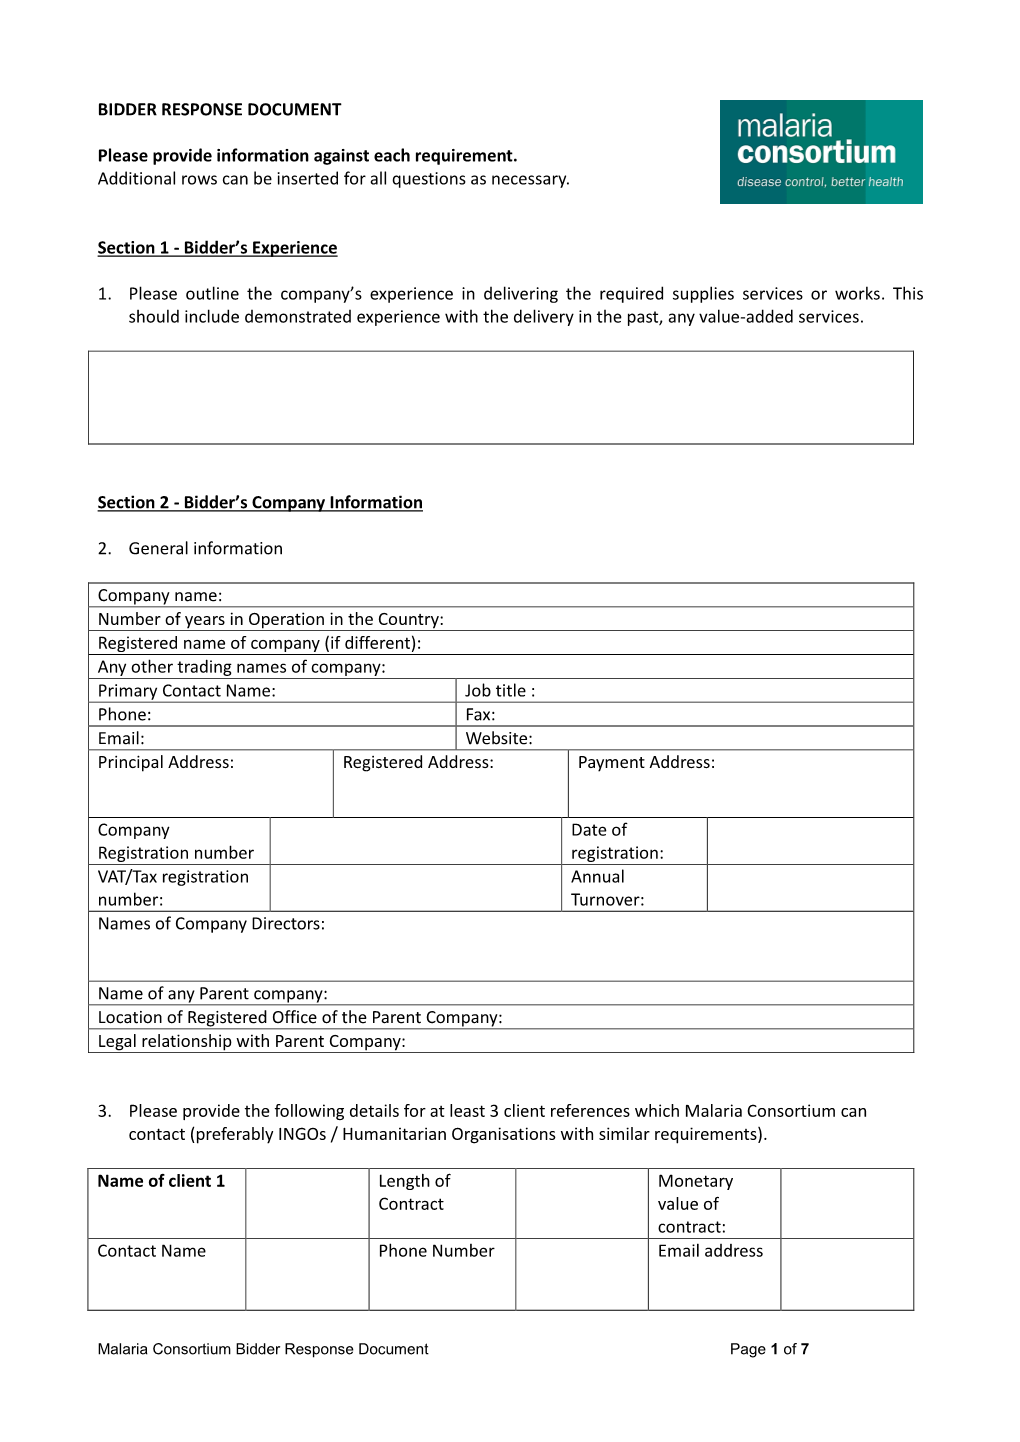 RFP Bidder Response Document Sample